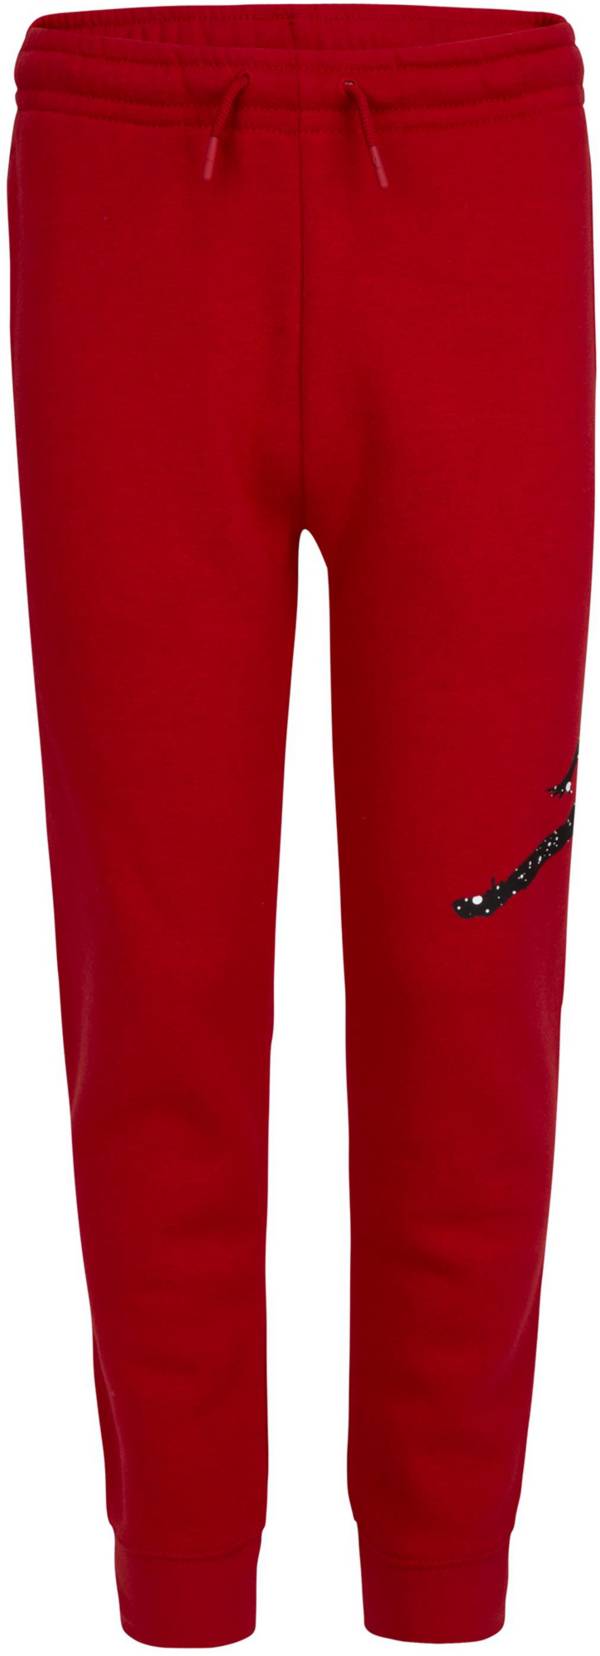 Jordan Boys' Speckle Jumpman Jogger Pants product image